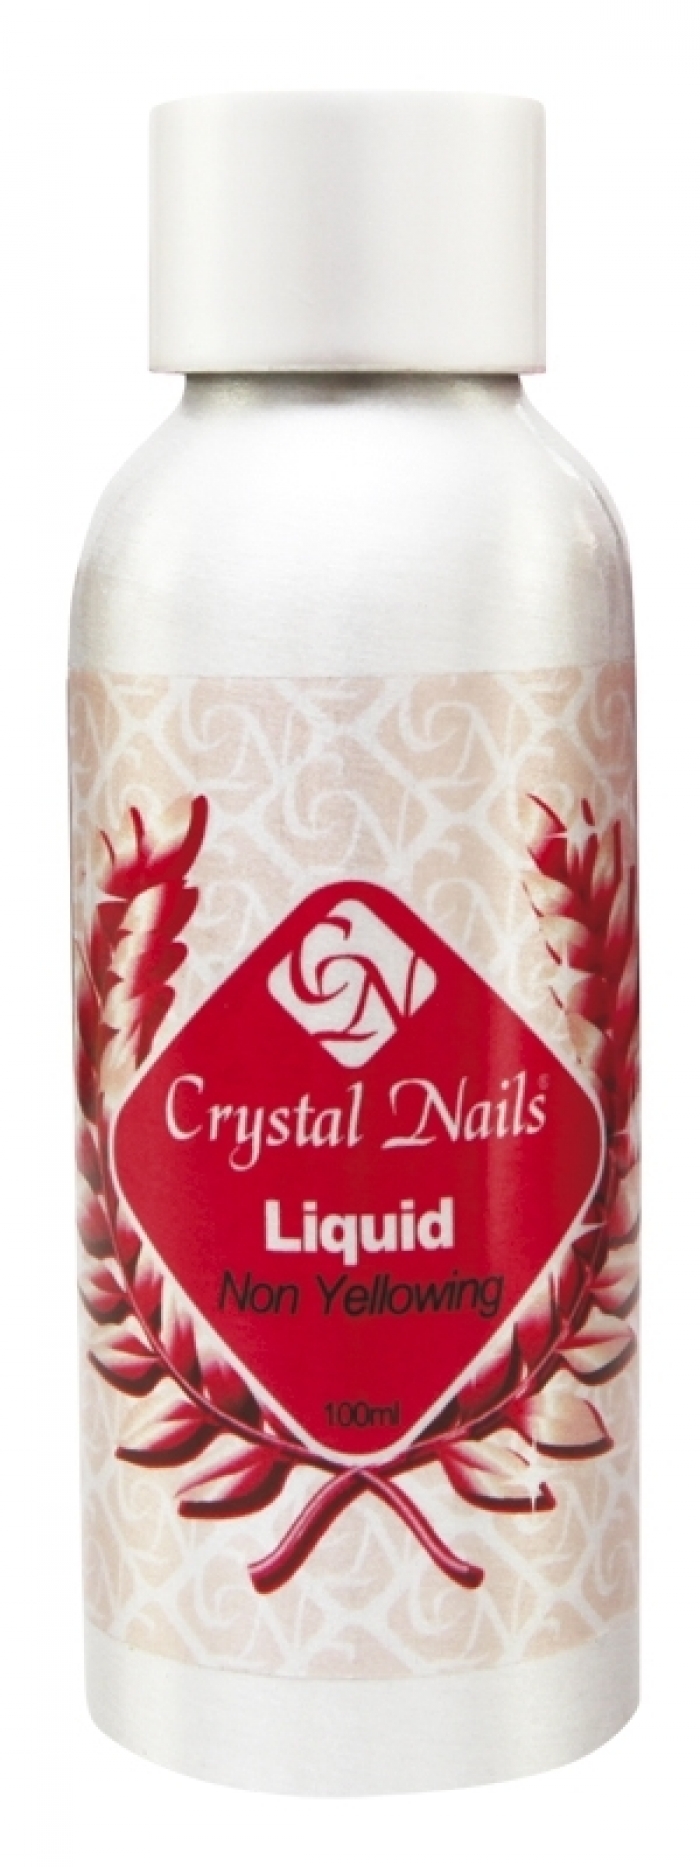 Liquid Crystal Nails 100 ml.